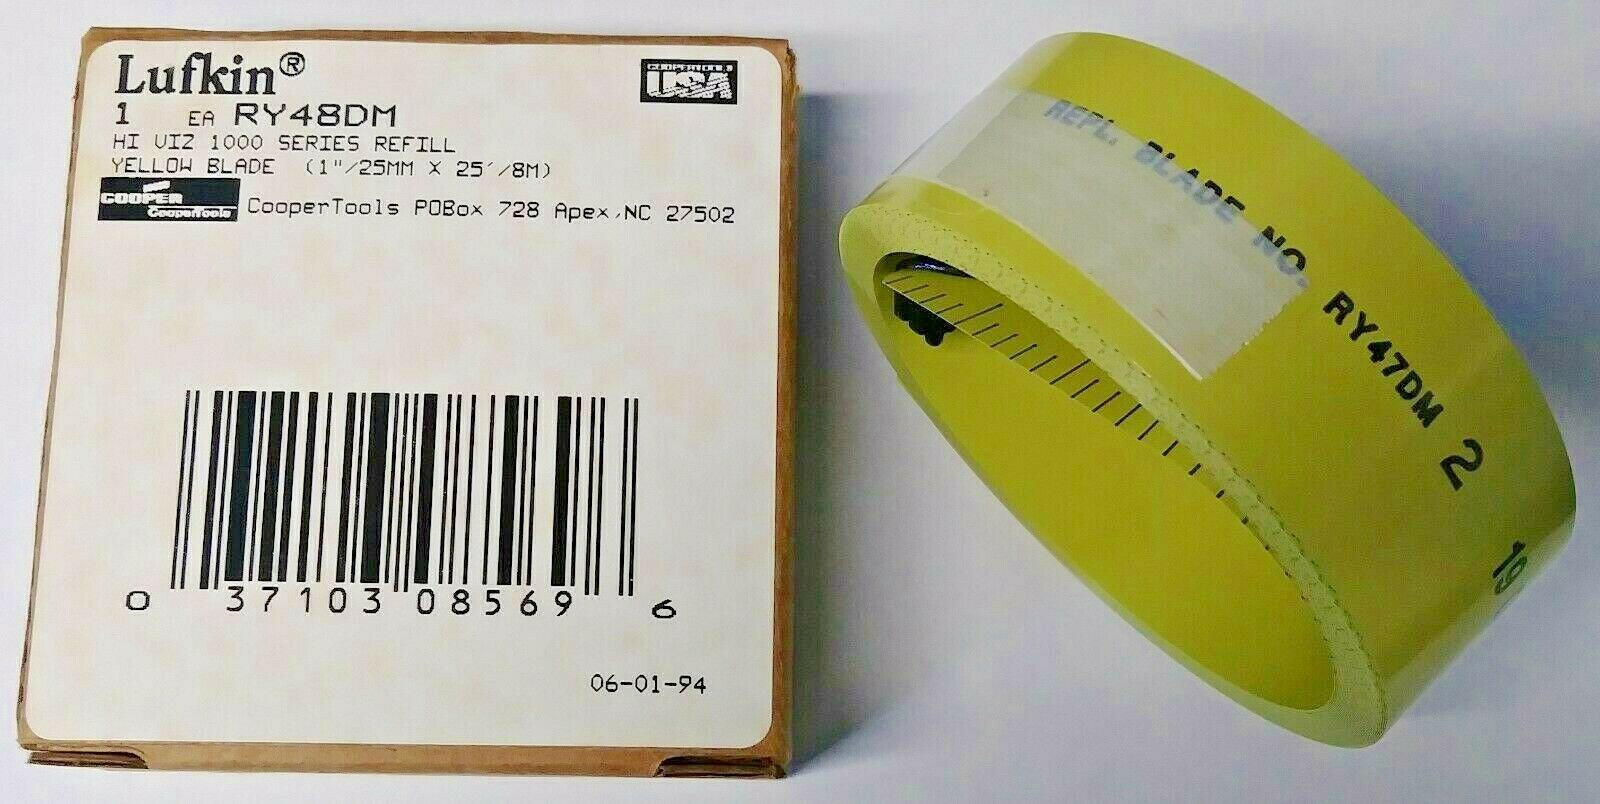 Lufkin RY48DM Hi Viz 1000 Series Yellow Blade Refill For HV1048DM 1" x 25' USA